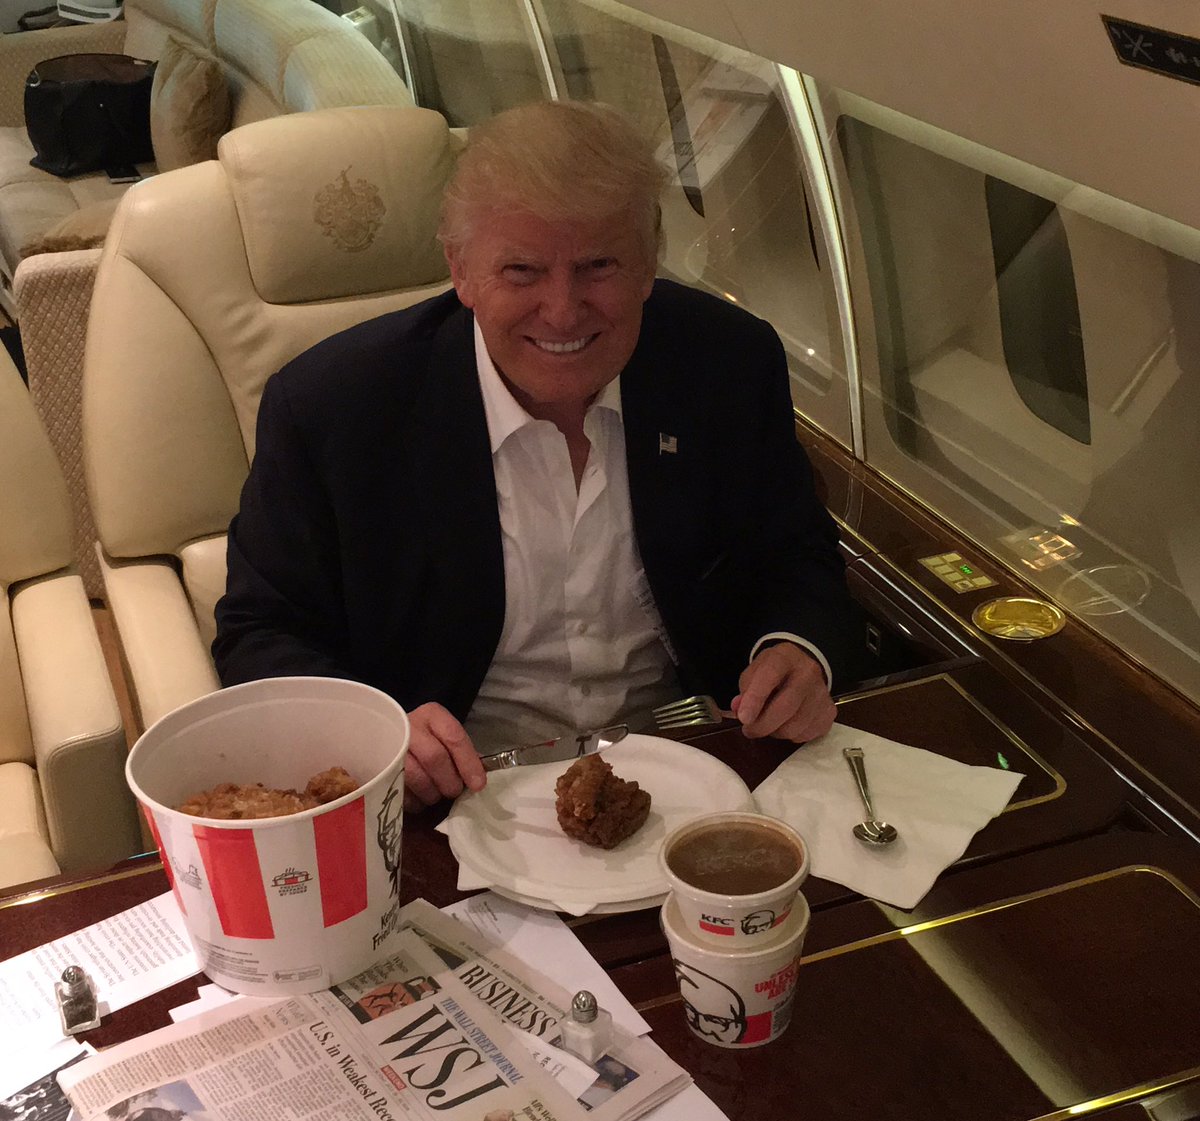 Resultado de imagen para twitter donald trump KFC